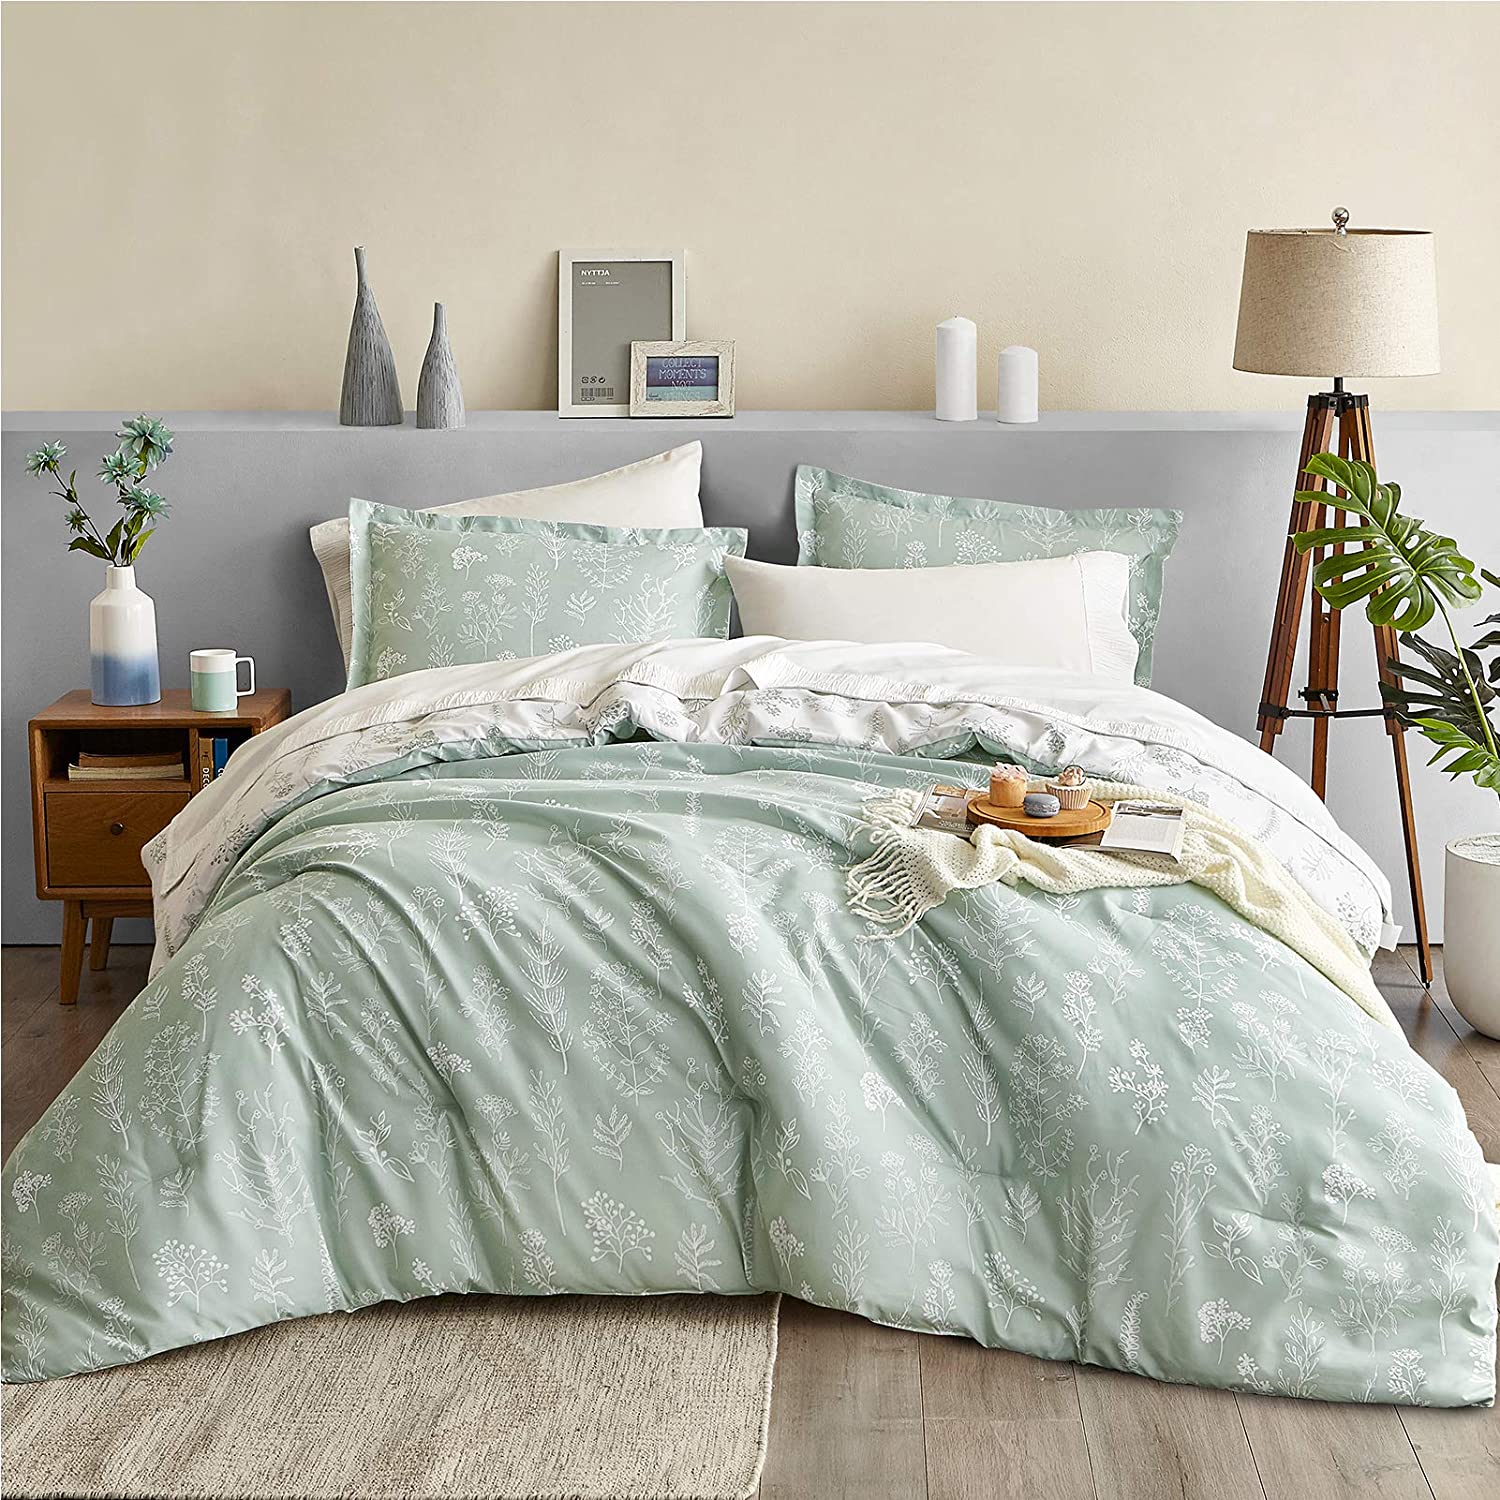 Bedsure Twin Comforter Set Coral Orange White - Reversible Floral Twin  Bedding C